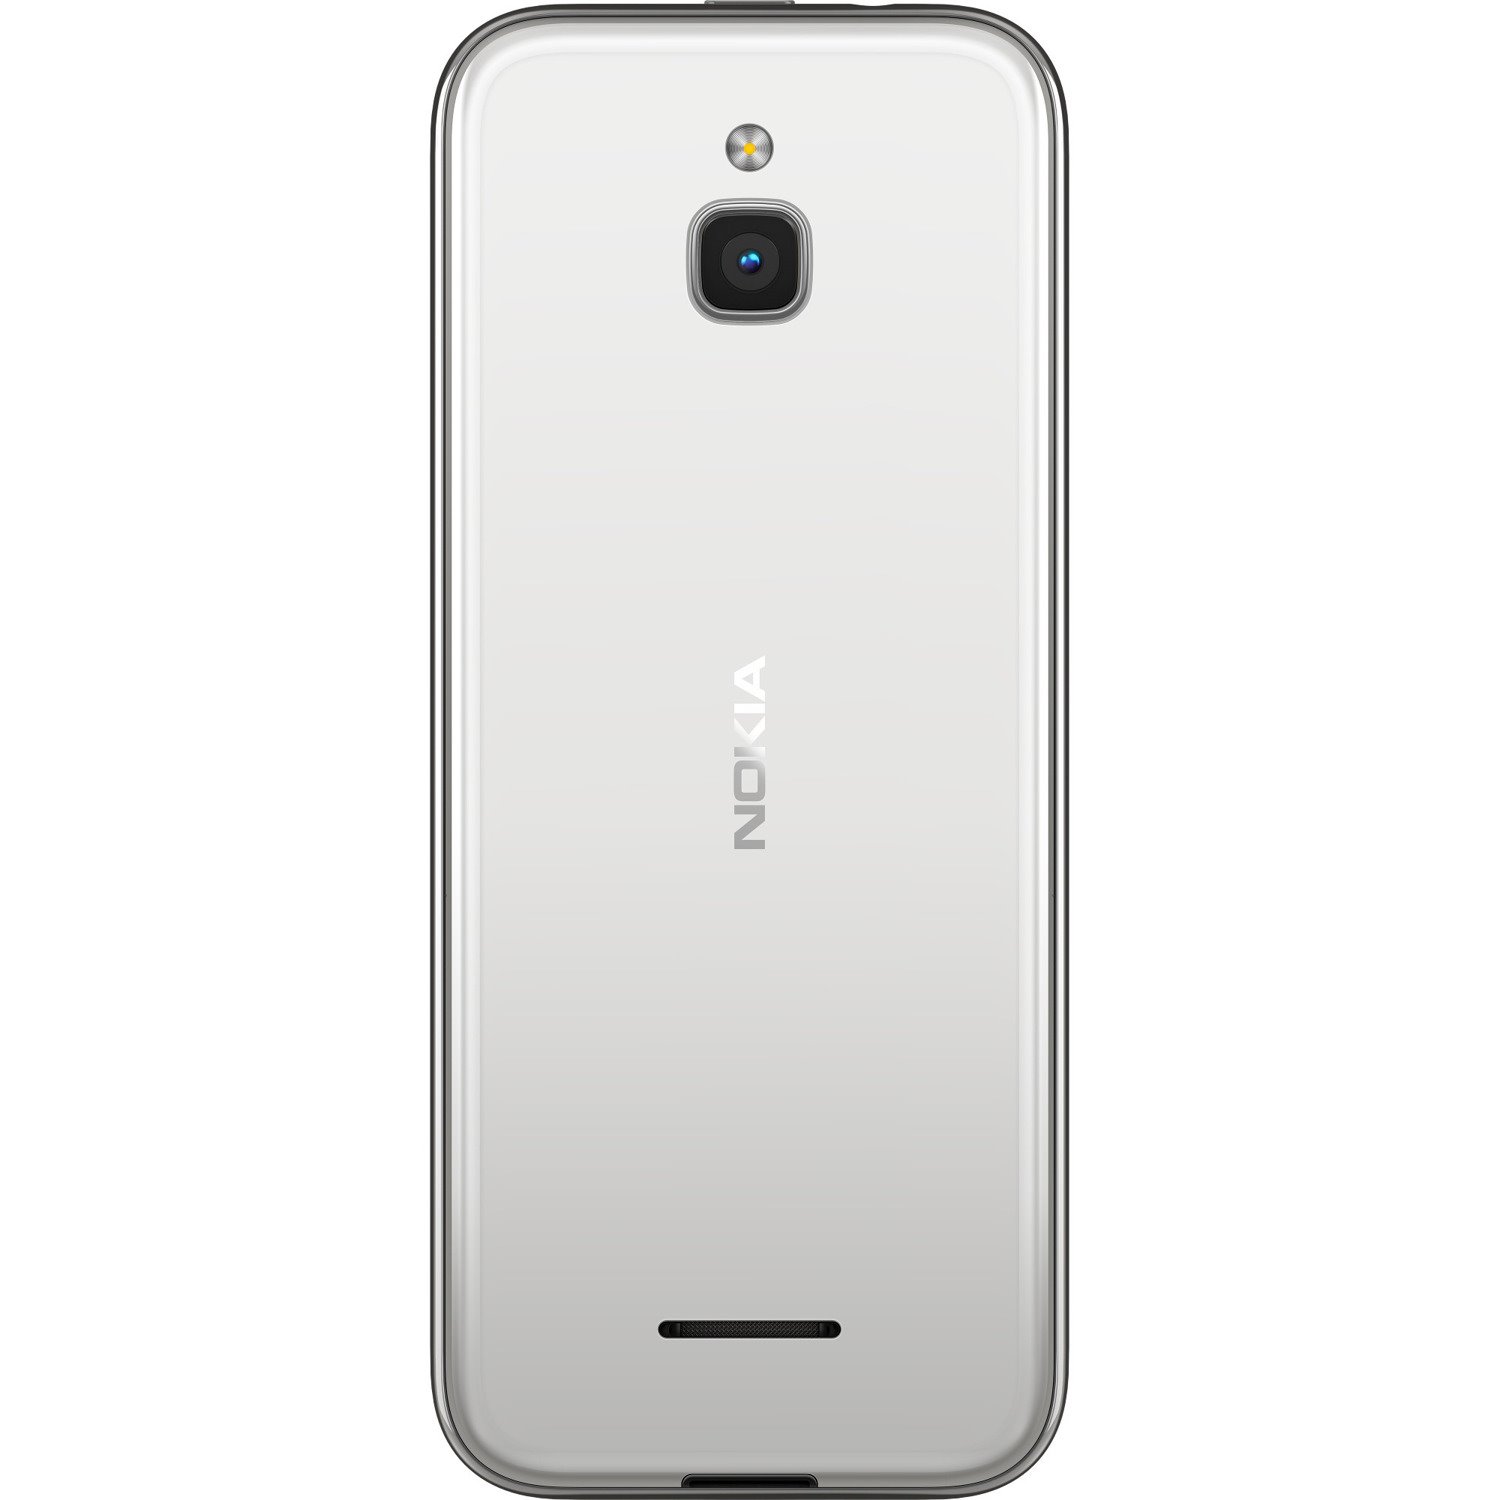 Nokia 8000 4G 4 GB Feature Phone - 7.1 cm (2.8") Active Matrix TFT LCD QVGA 320 x 240 - Cortex A7Quad-core (4 Core) 1.10 GHz - 512 MB RAM - 4G - Opal White